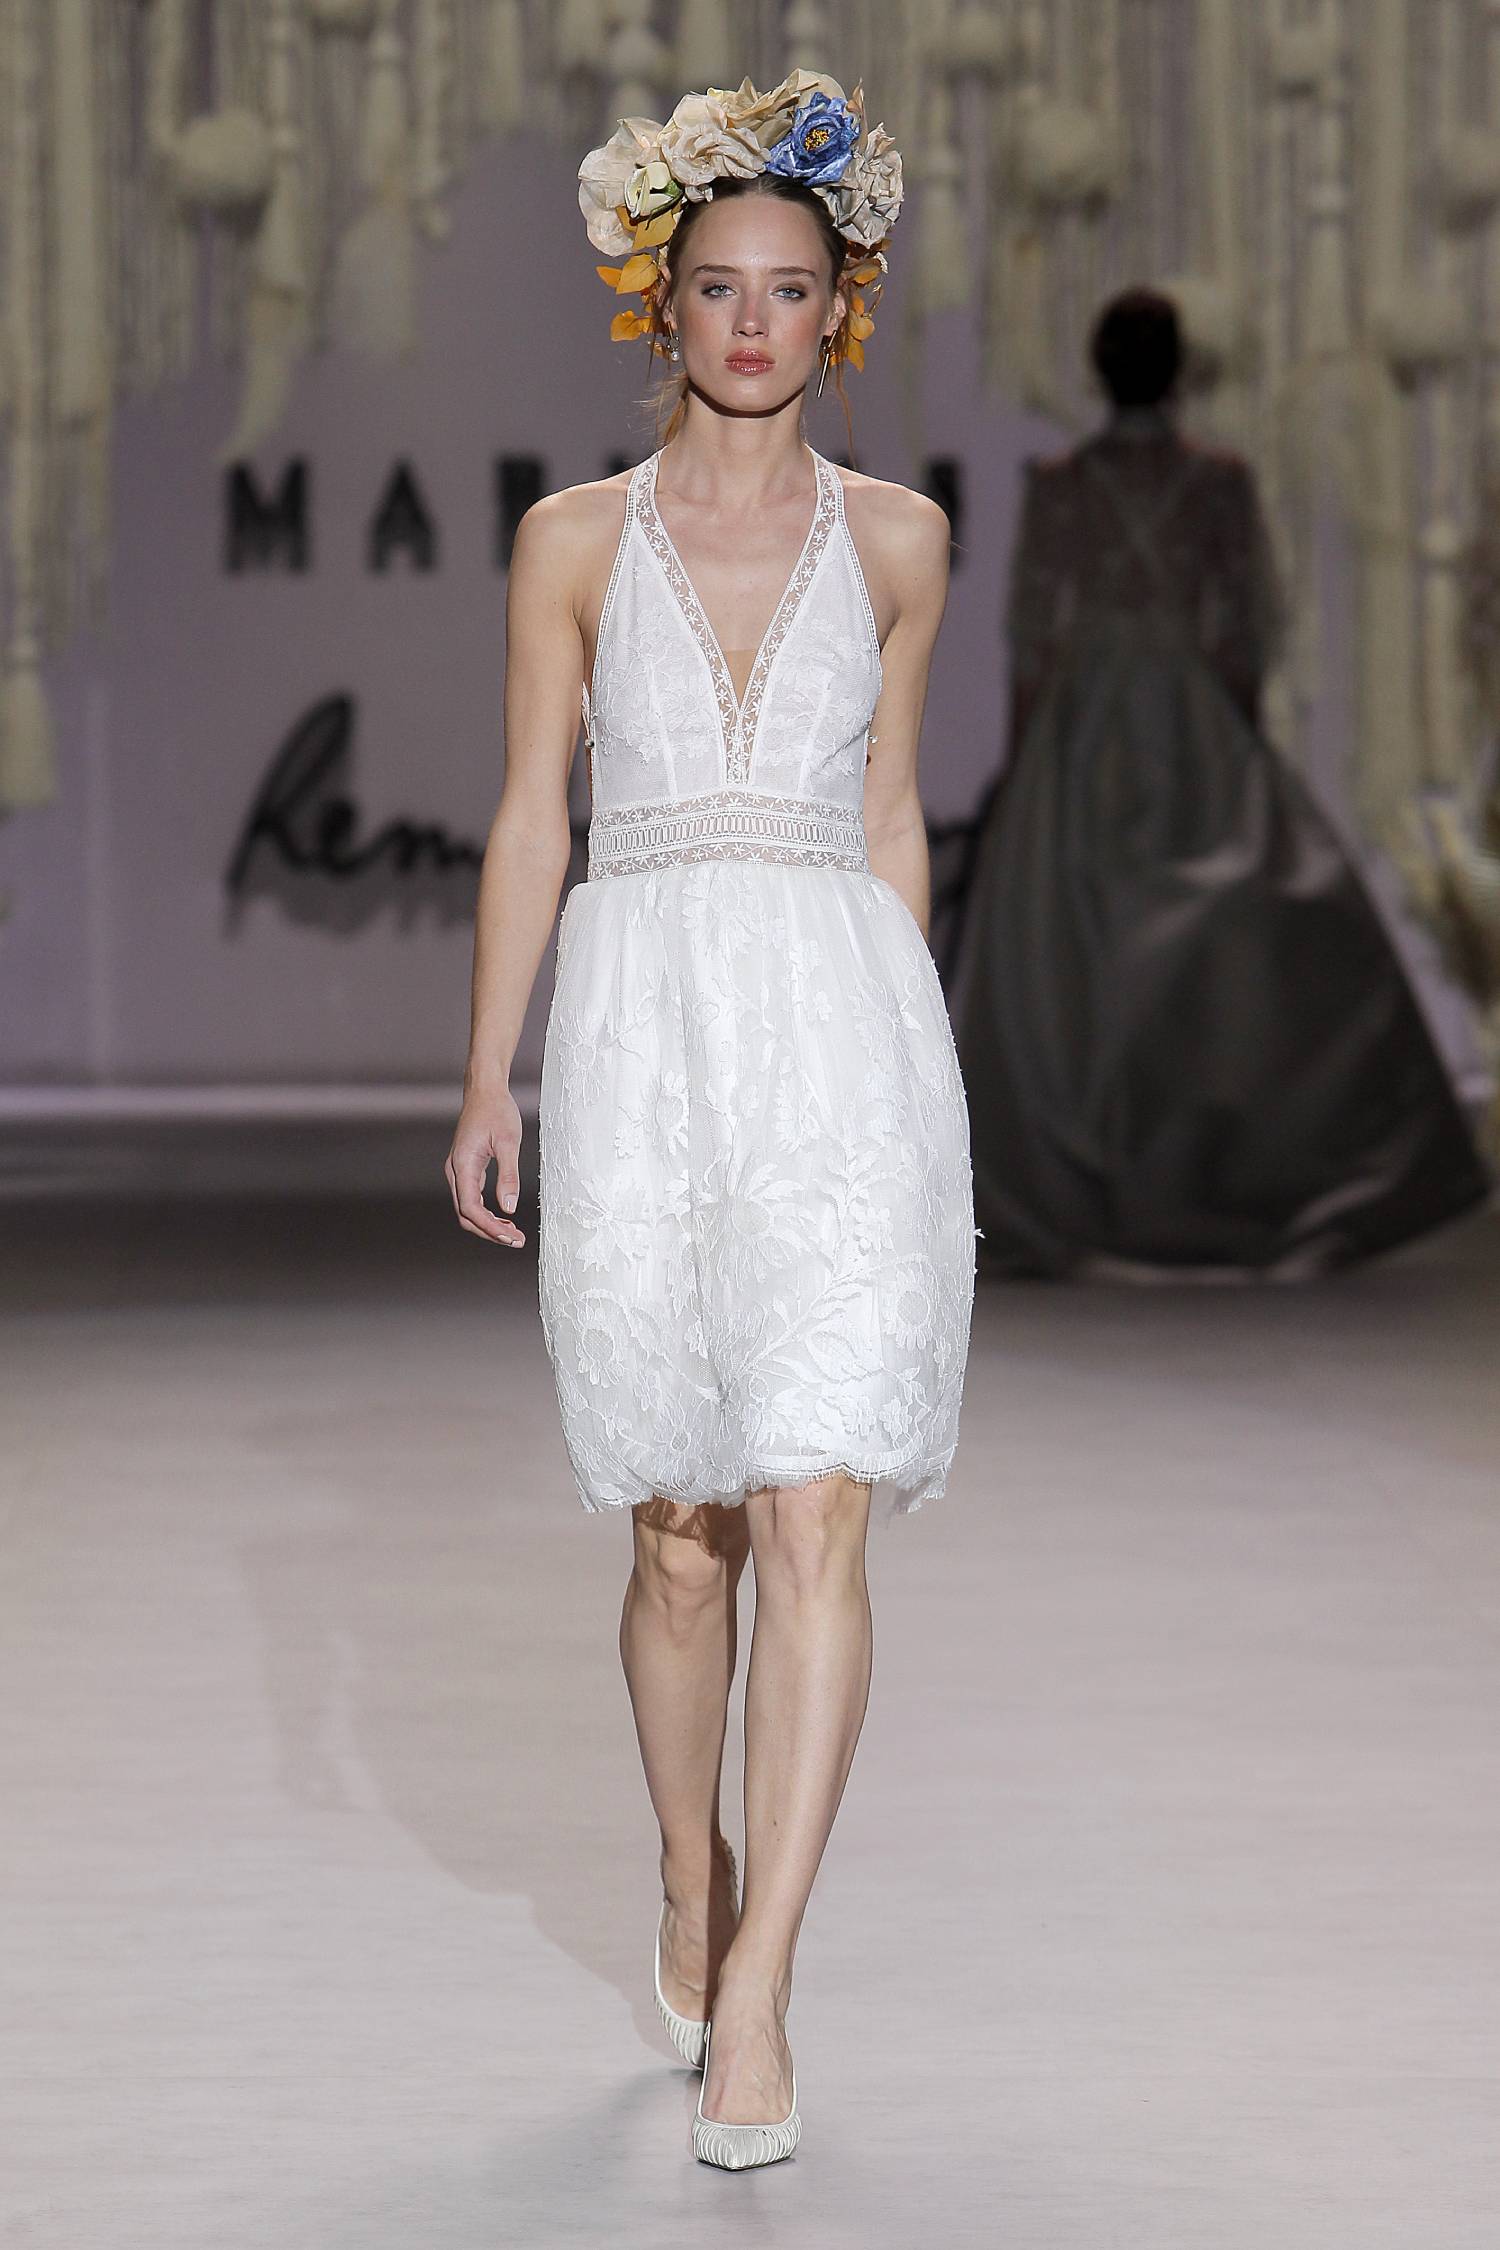 Marylise by Rembo Styling. Credits: Barcelona Bridal Fashion Week